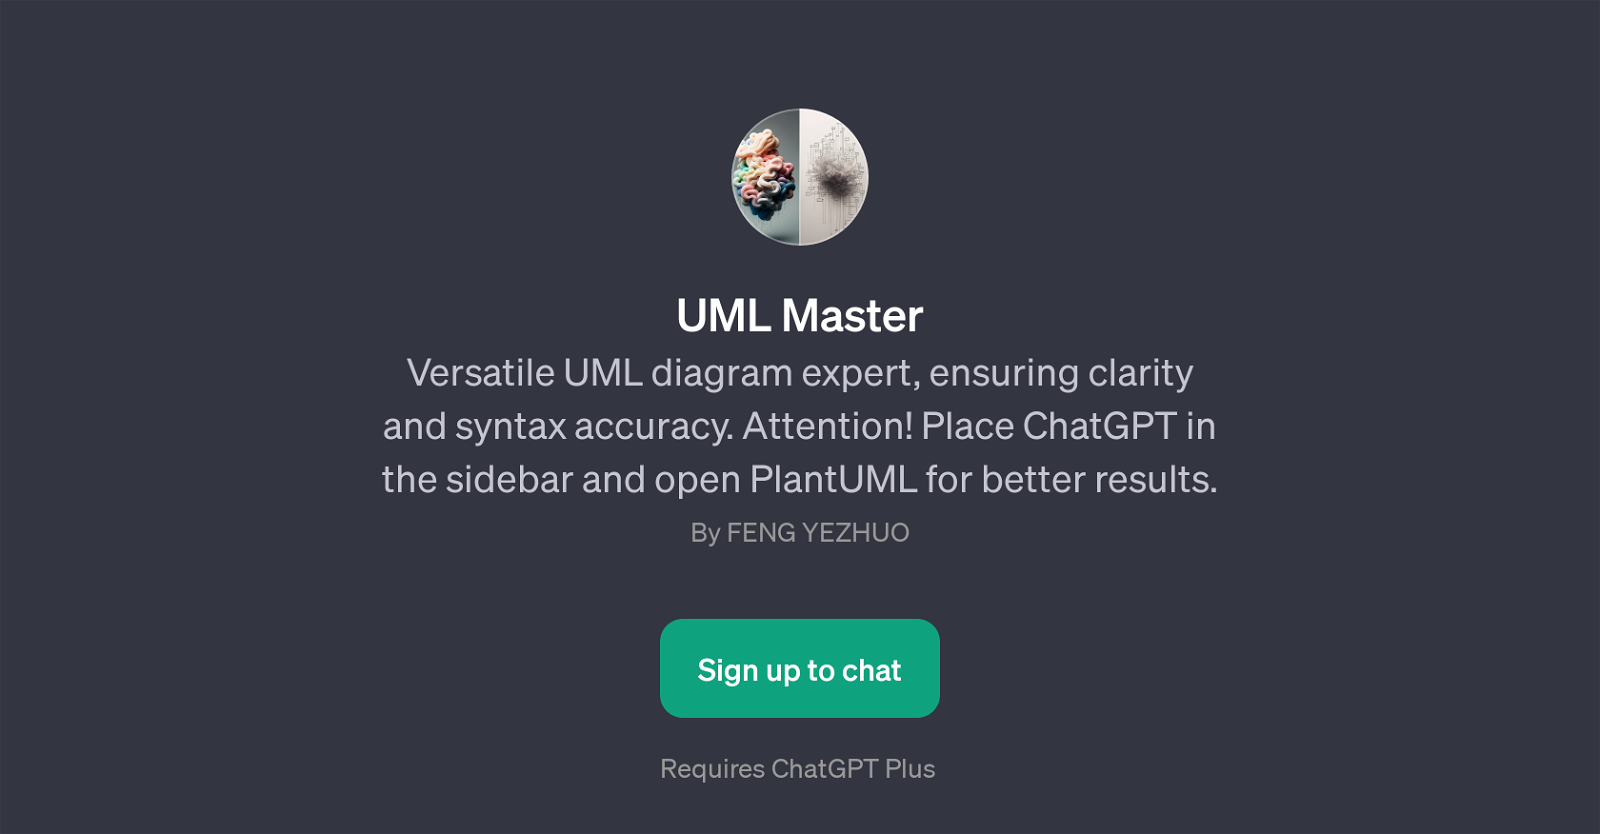 UML Master website